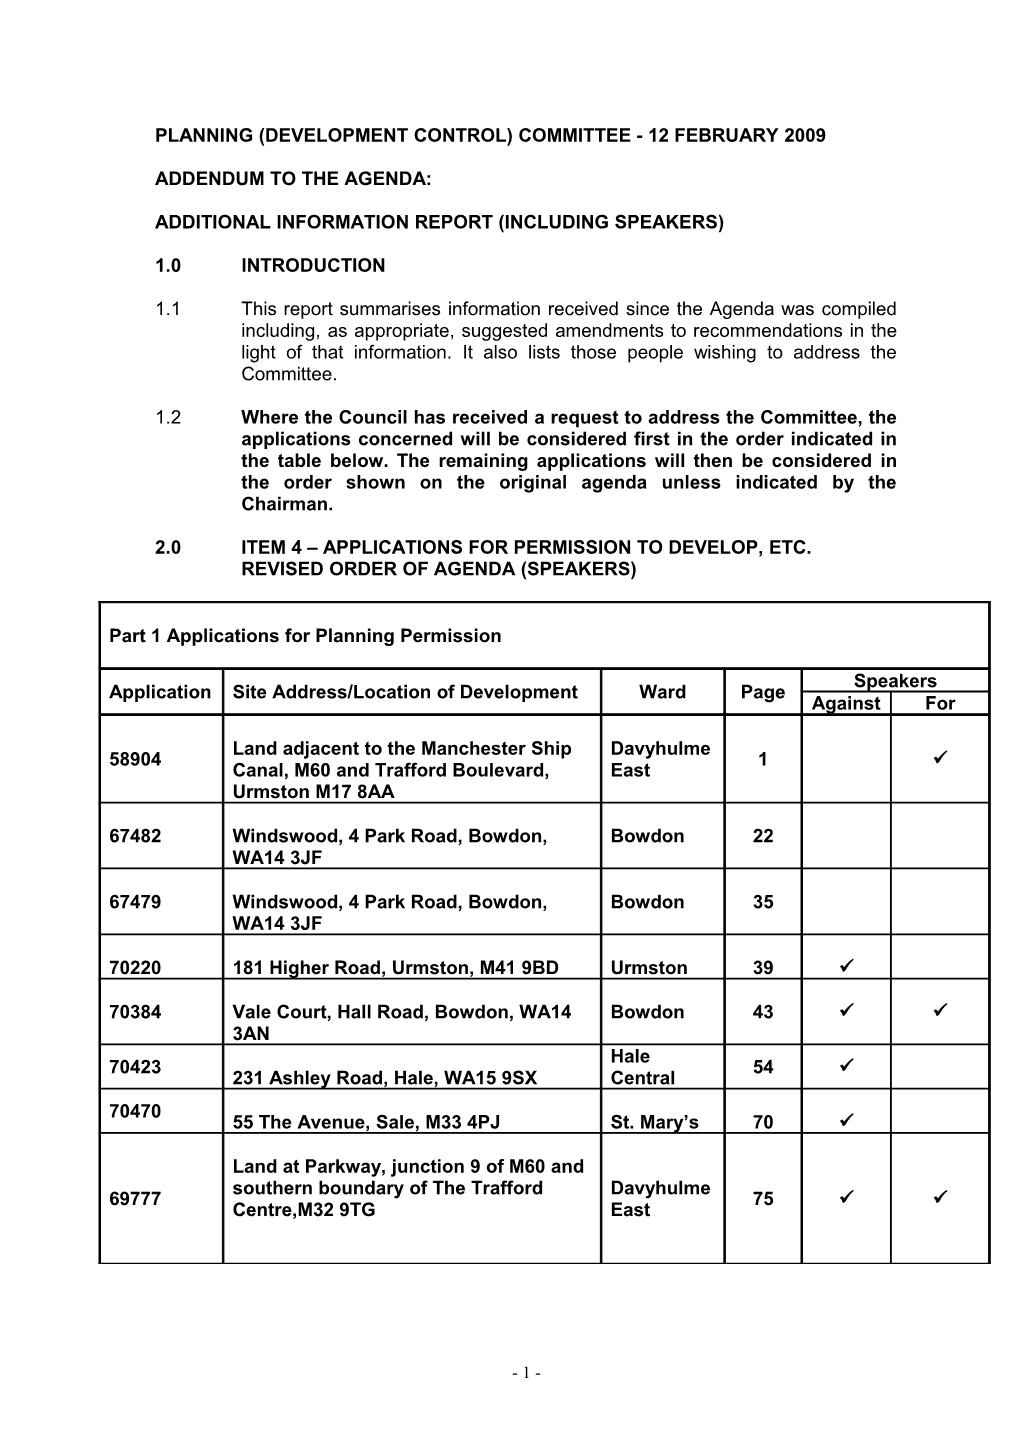 PDC Agenda Item 3 - Additional Info Report - 12/02/09